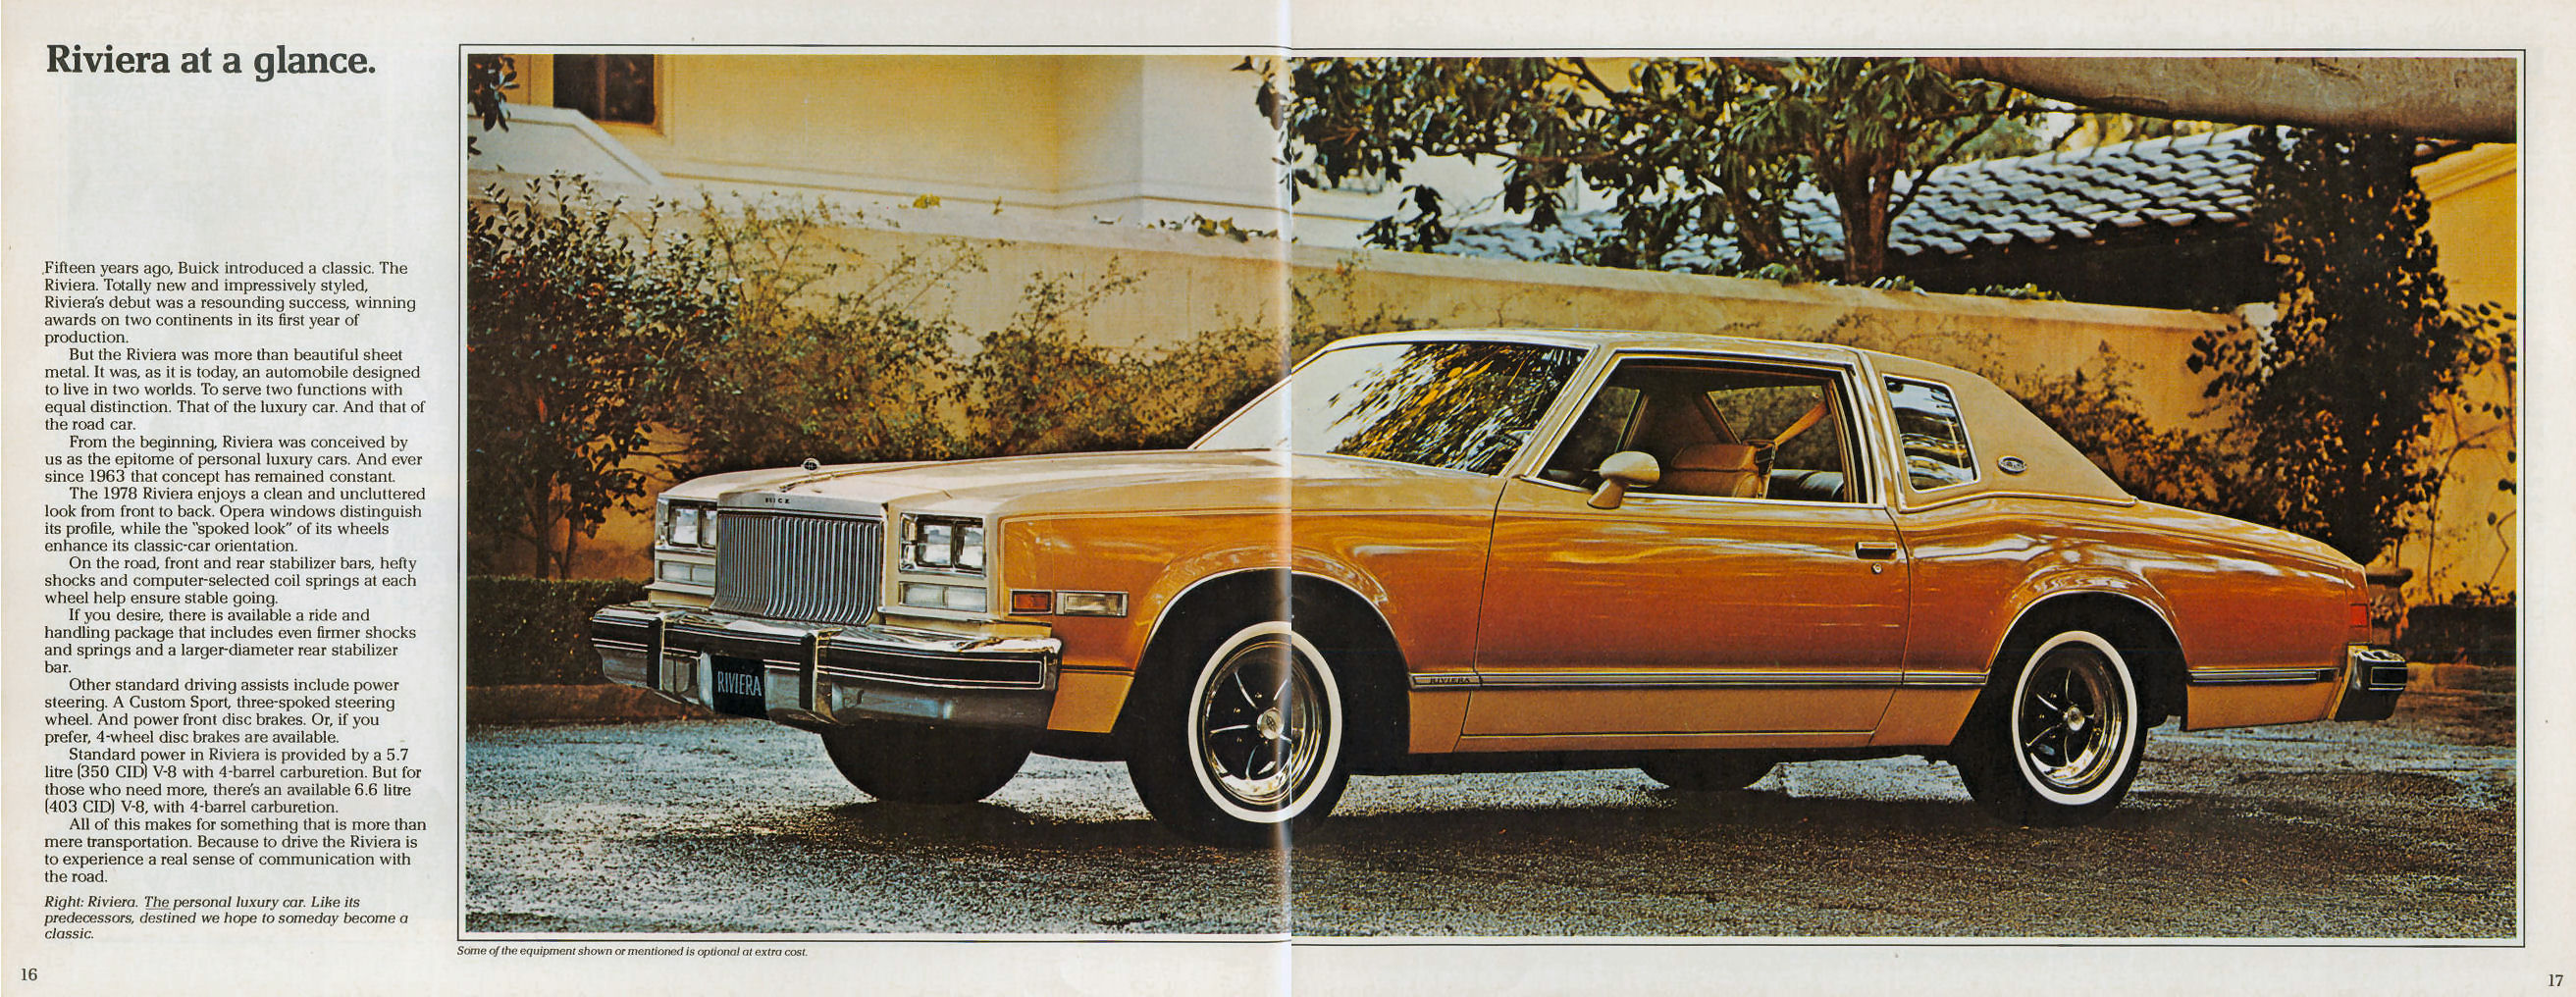 1978_Buick_Full_Size_Cdn-16-17